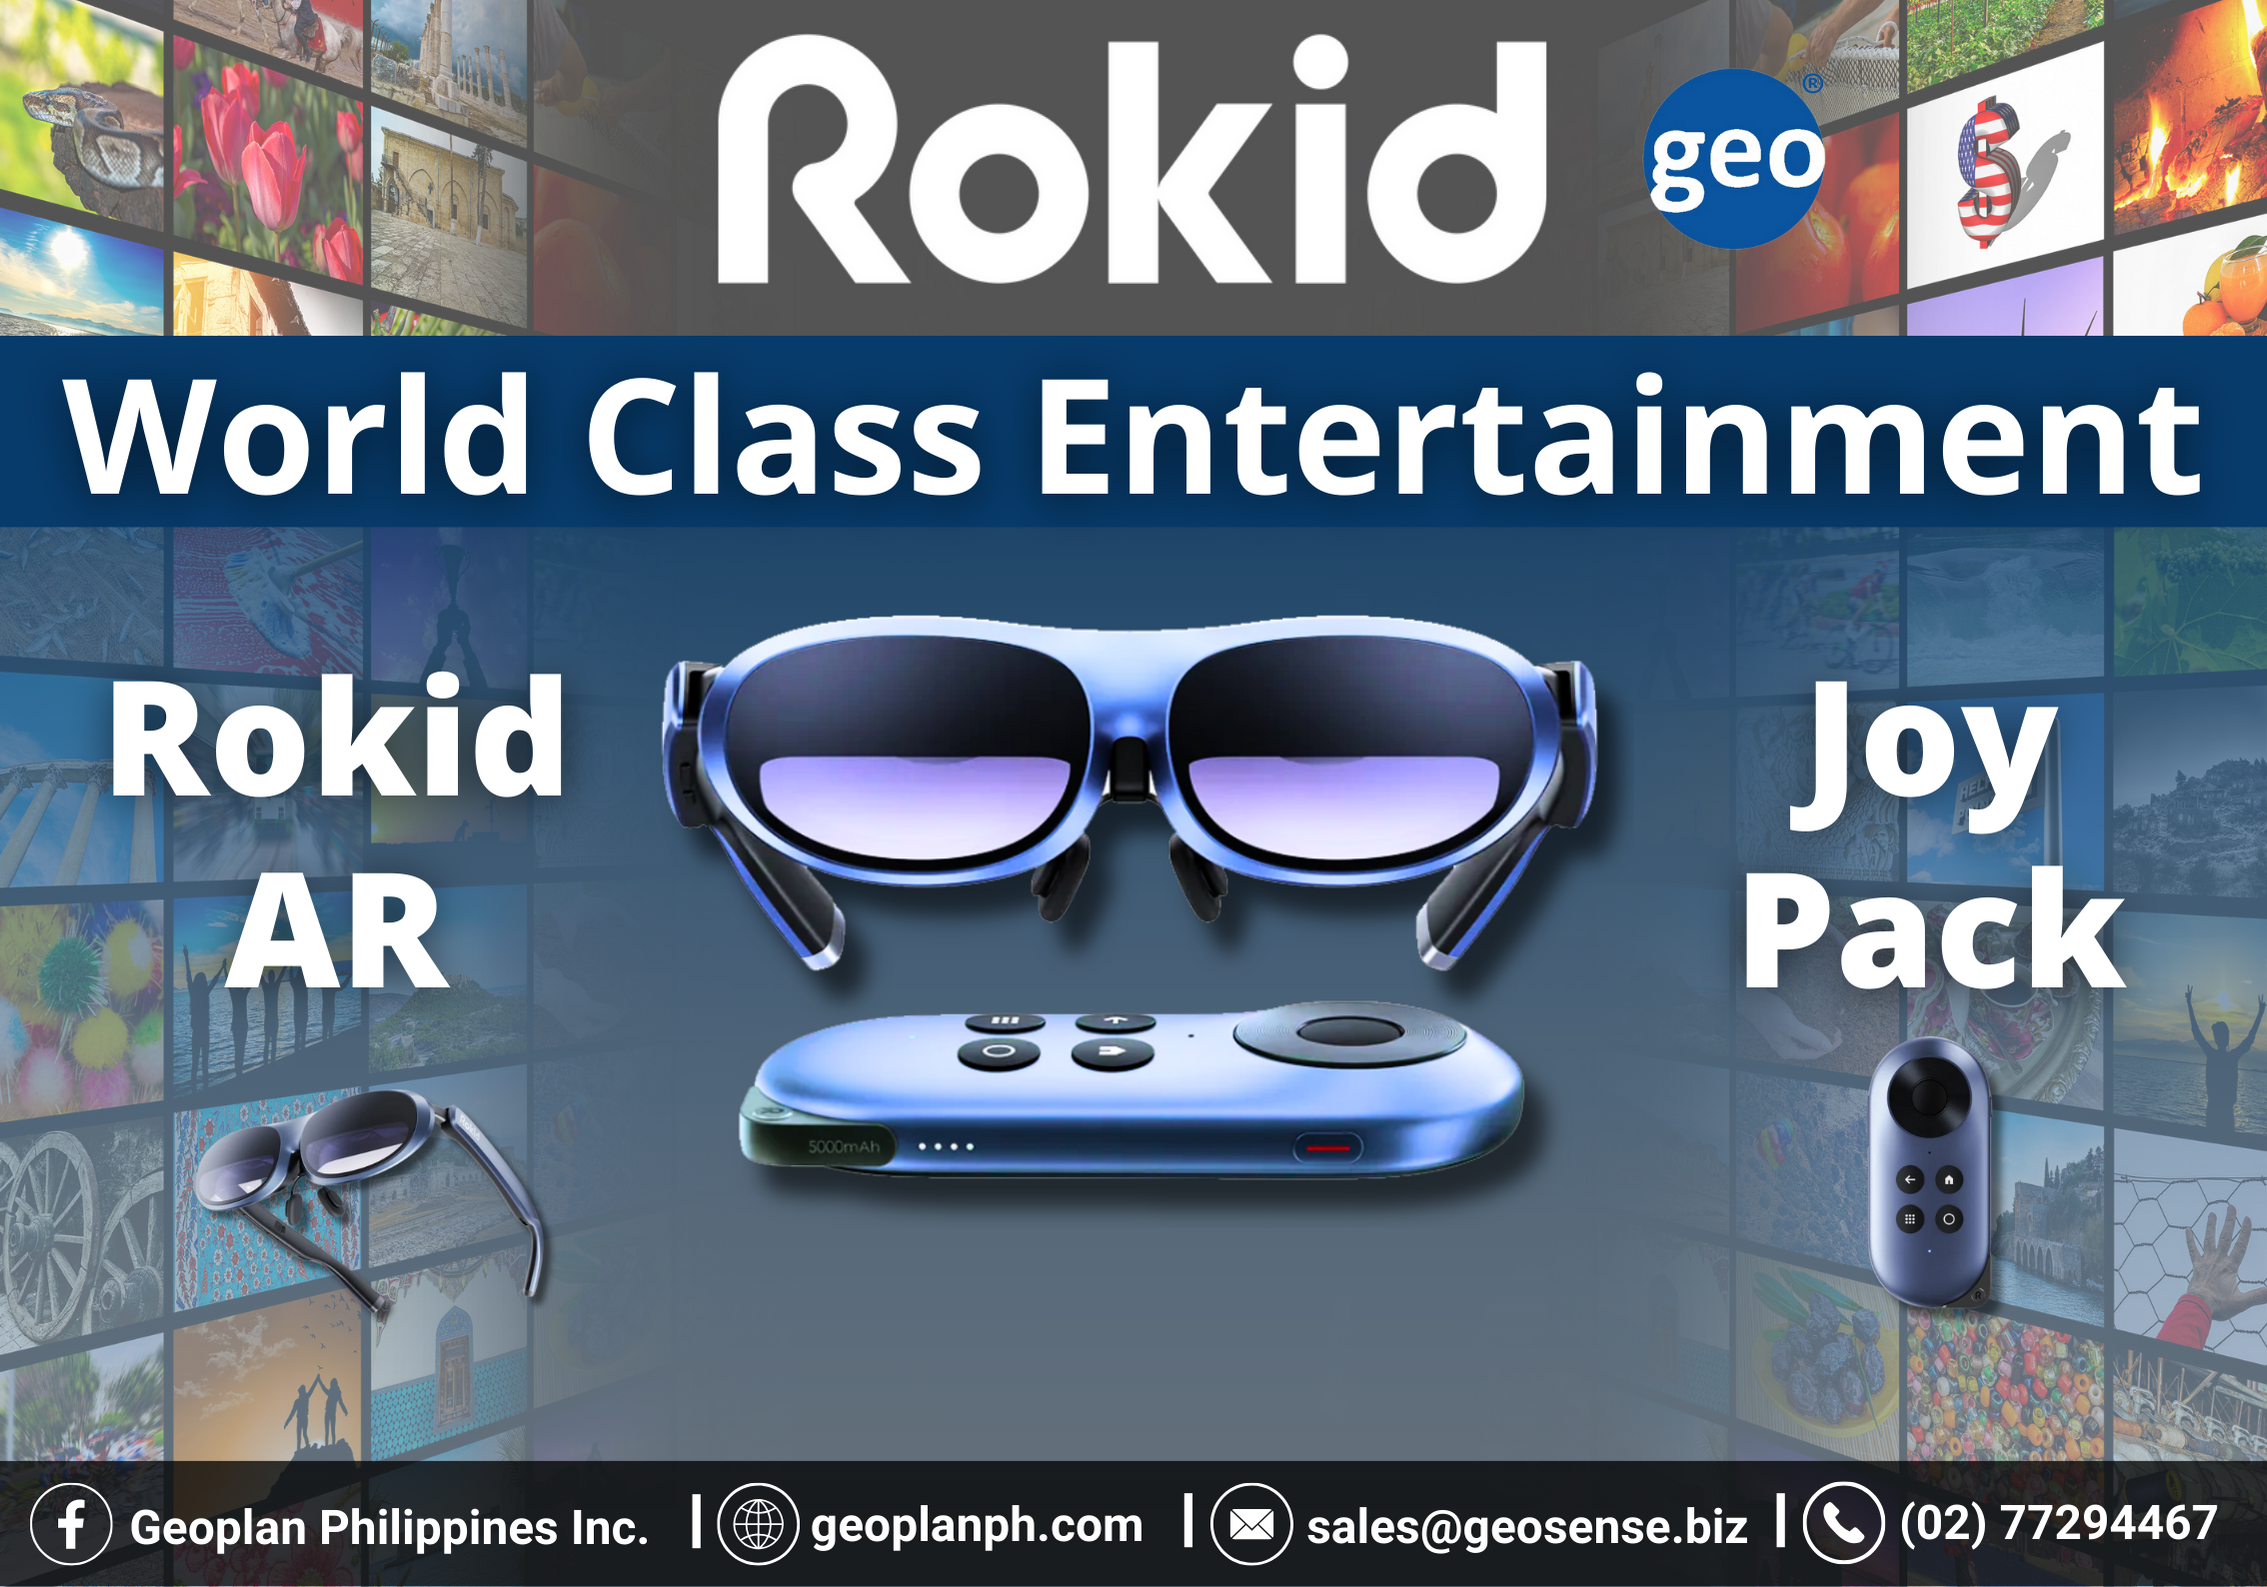 Rokid: The World Class AR Entertainment You Desire